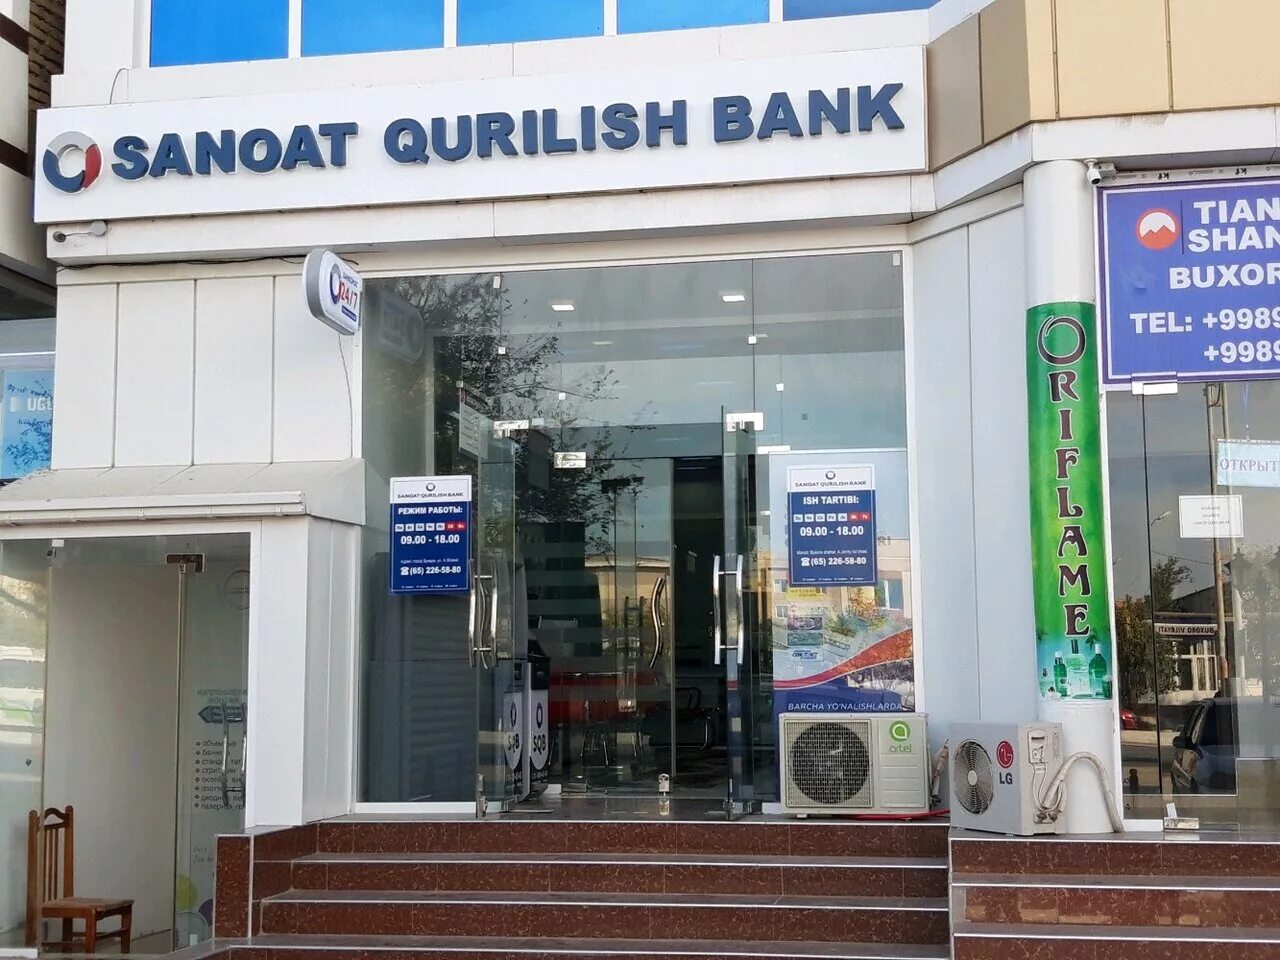 Qurilish bank uz. Sanoat qurilish банк. Ташкент саноат КУРИЛИШ банк. Бухоро саноат КУРИЛИШ банк. Банк в Бухаре.